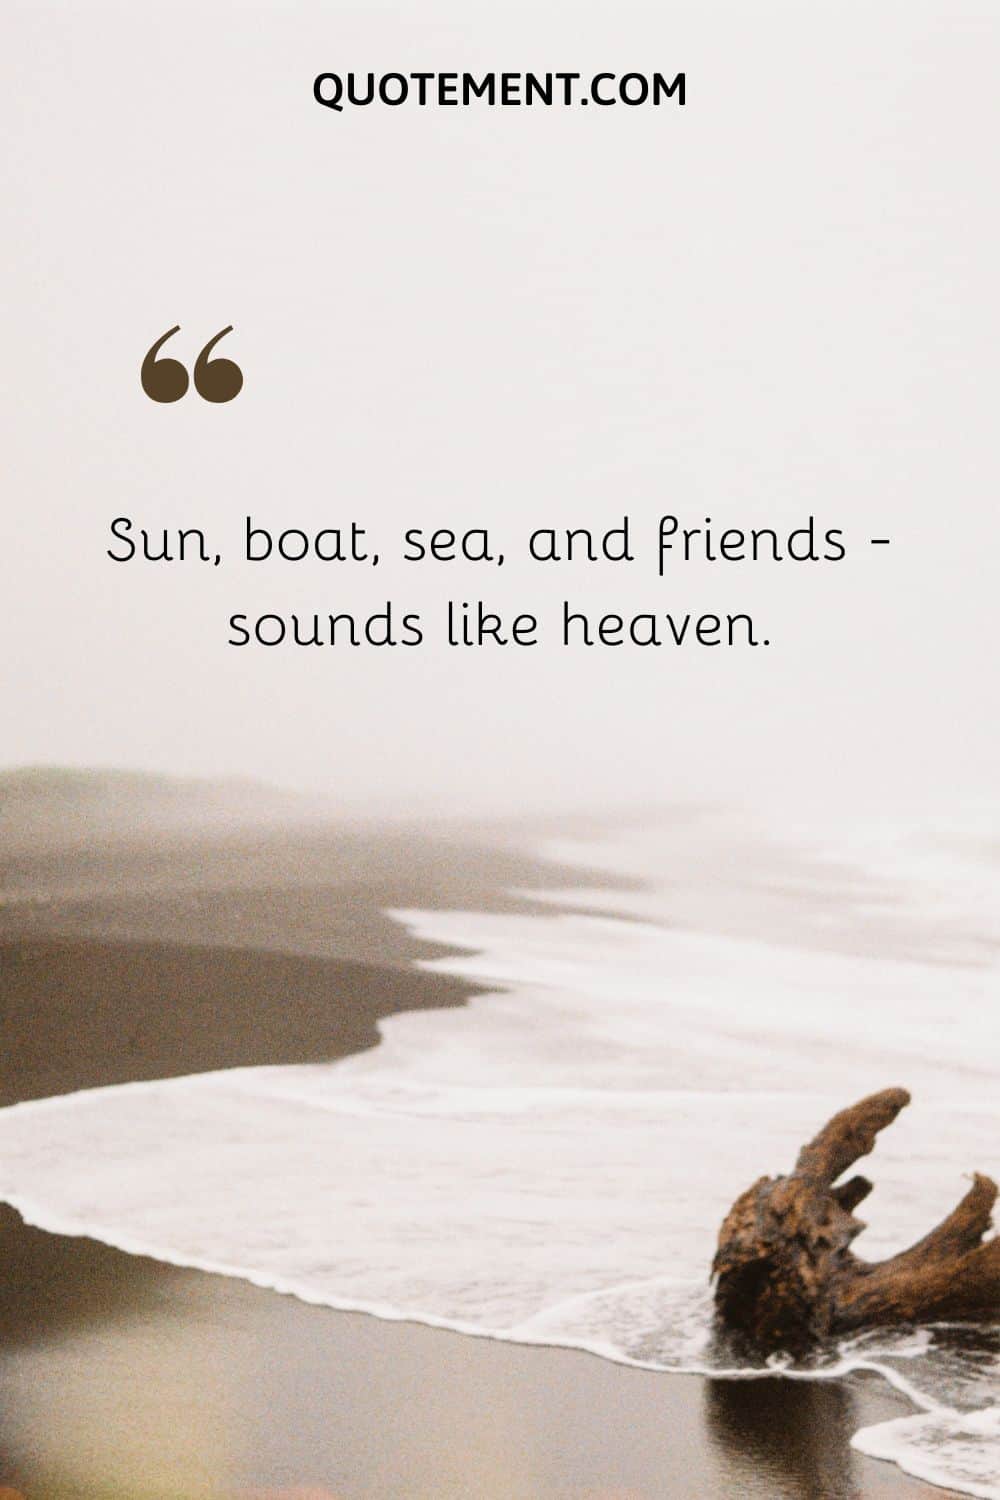 Sun, boat, sea, and friends - sounds like heaven.